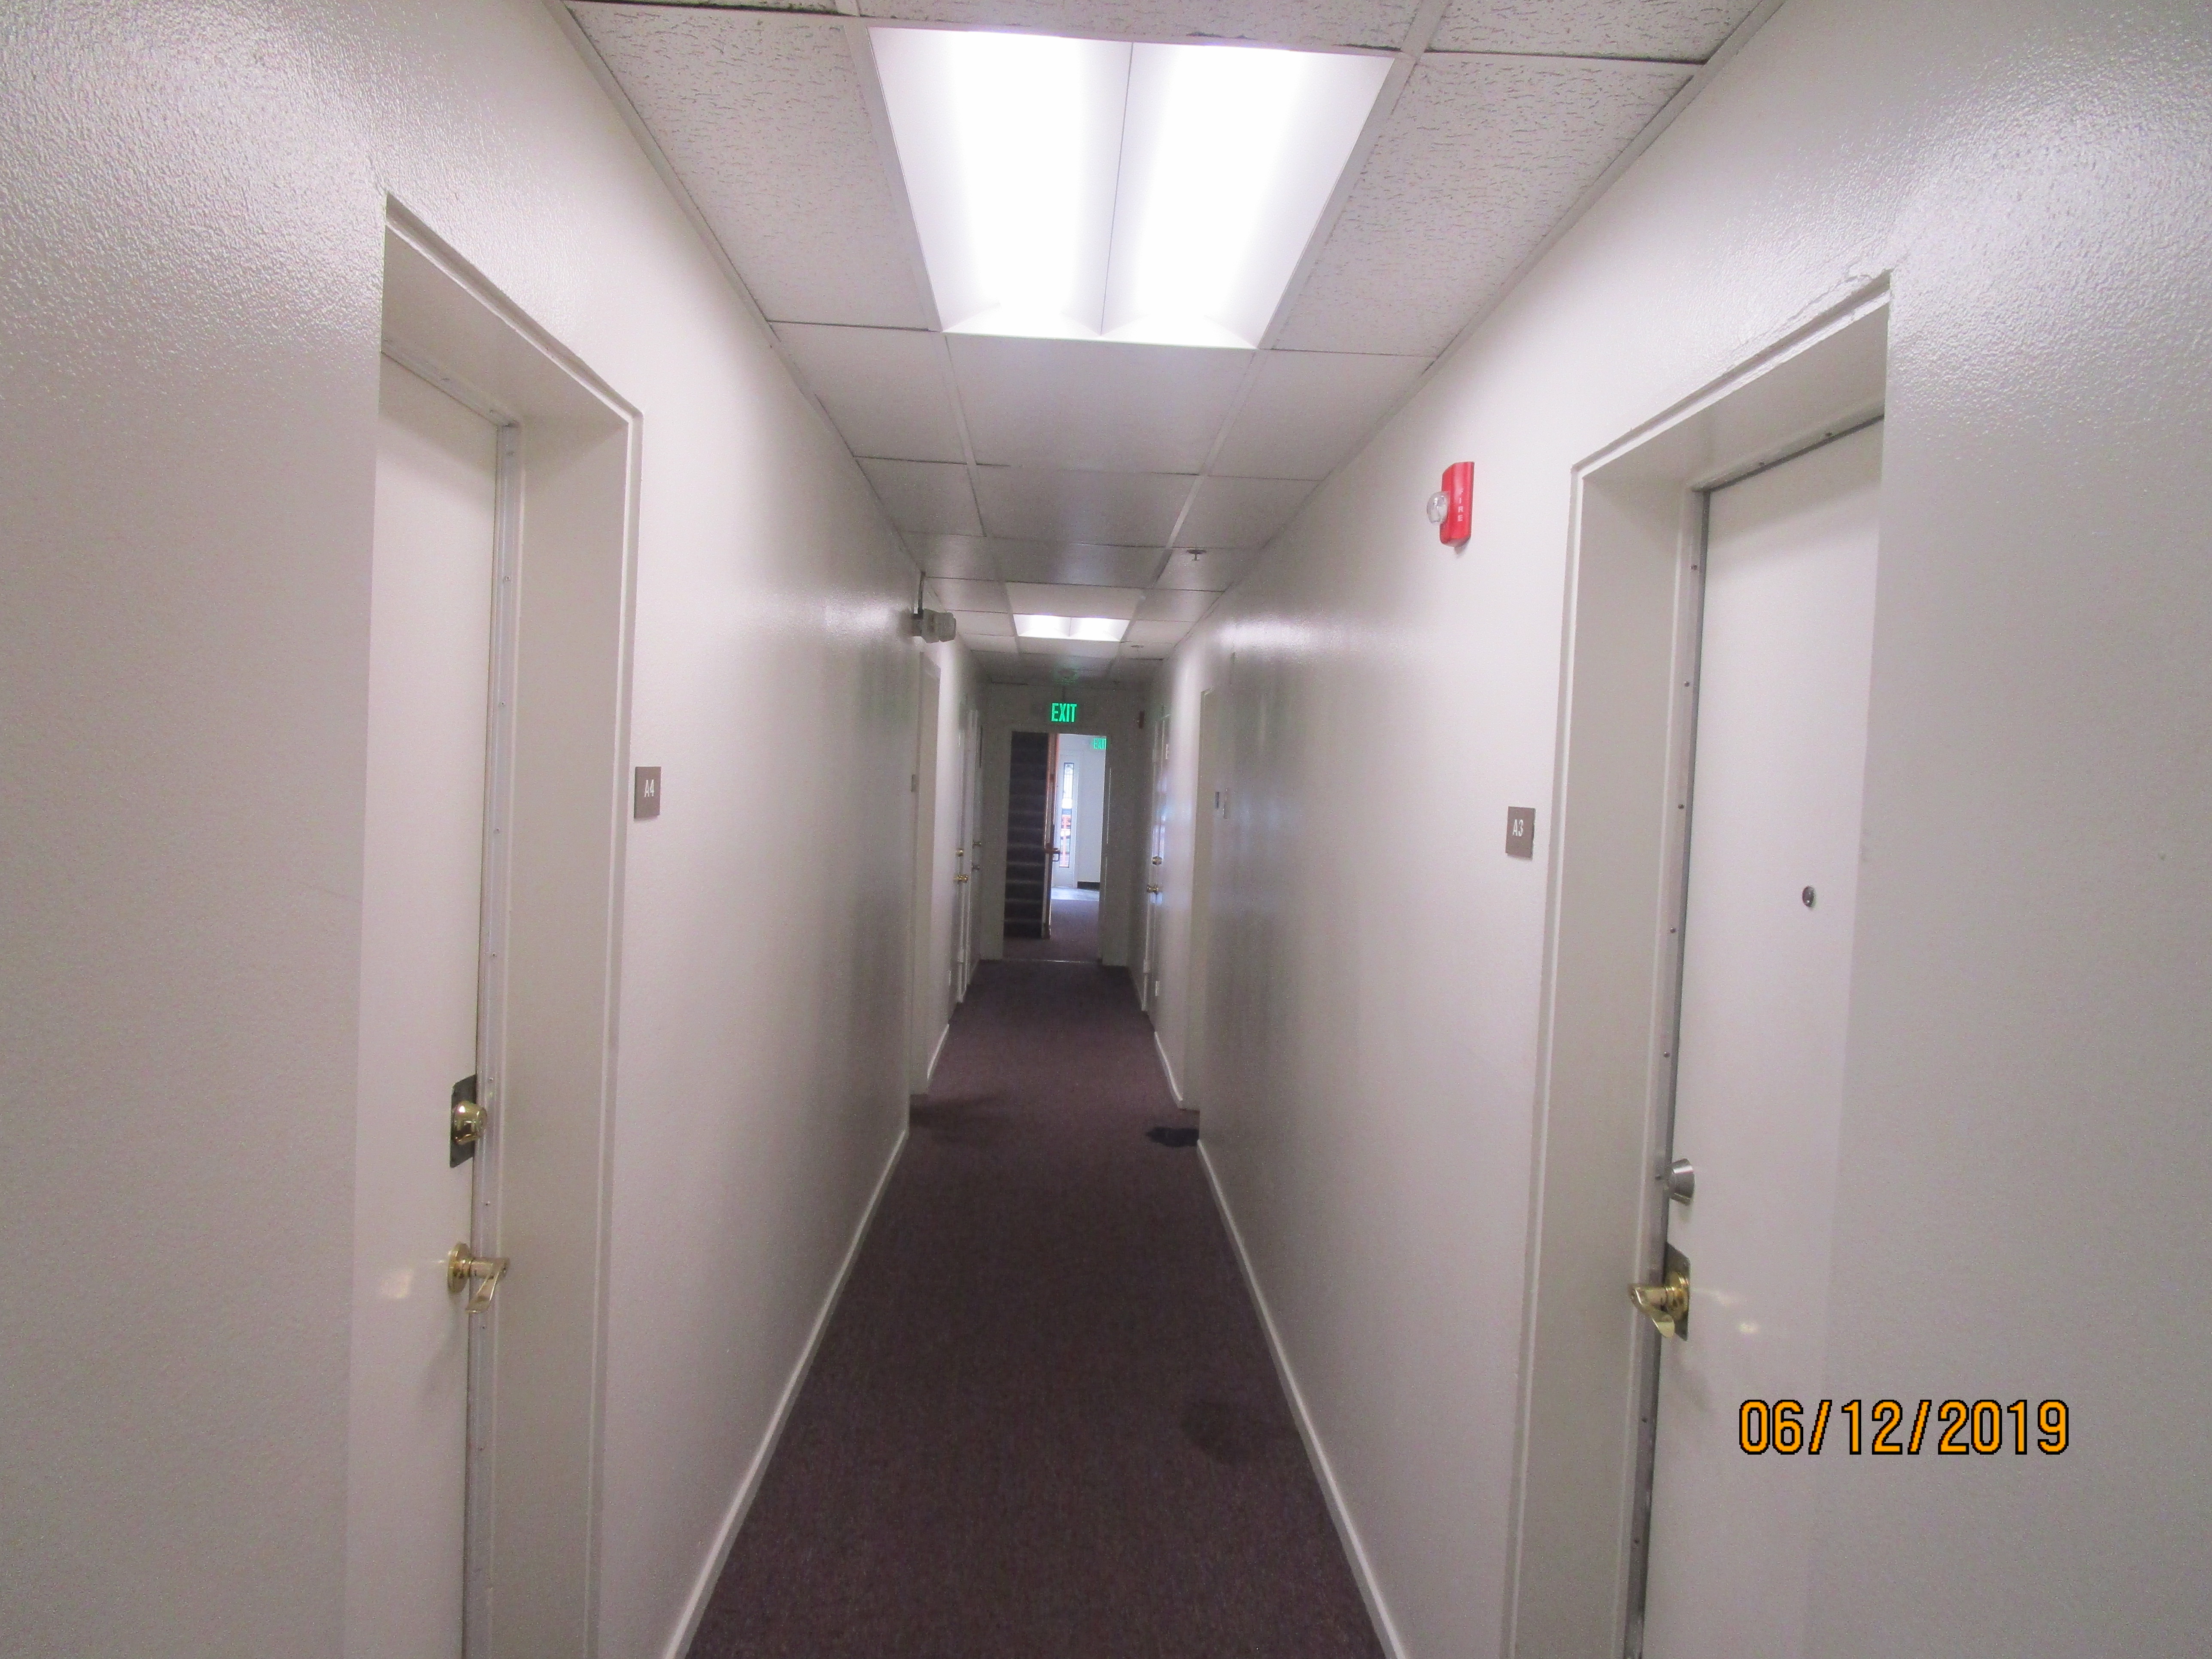 White walls hallway, unit white doors, brown carpet, office like ceiling lights.